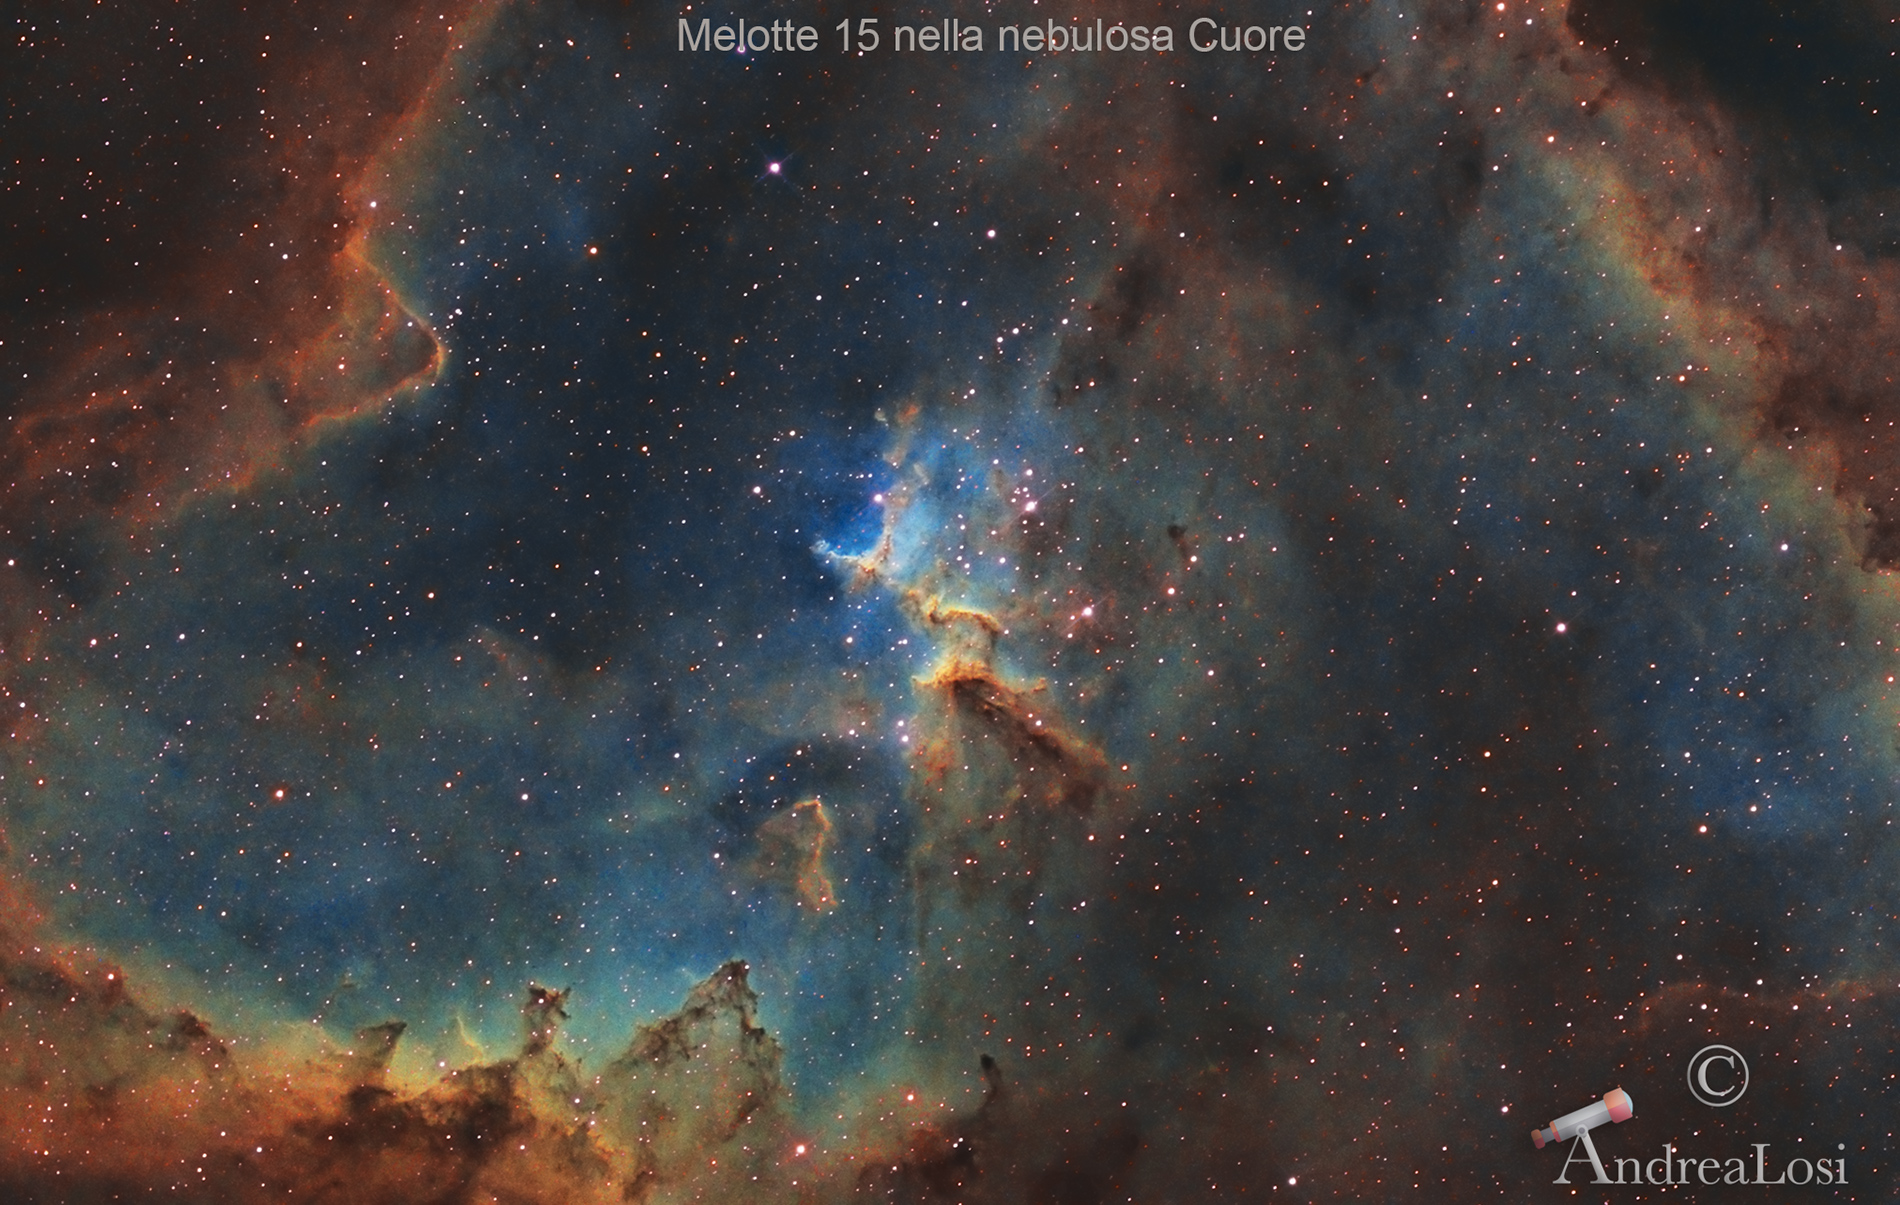 Melotte 15 in the heart nebula ...